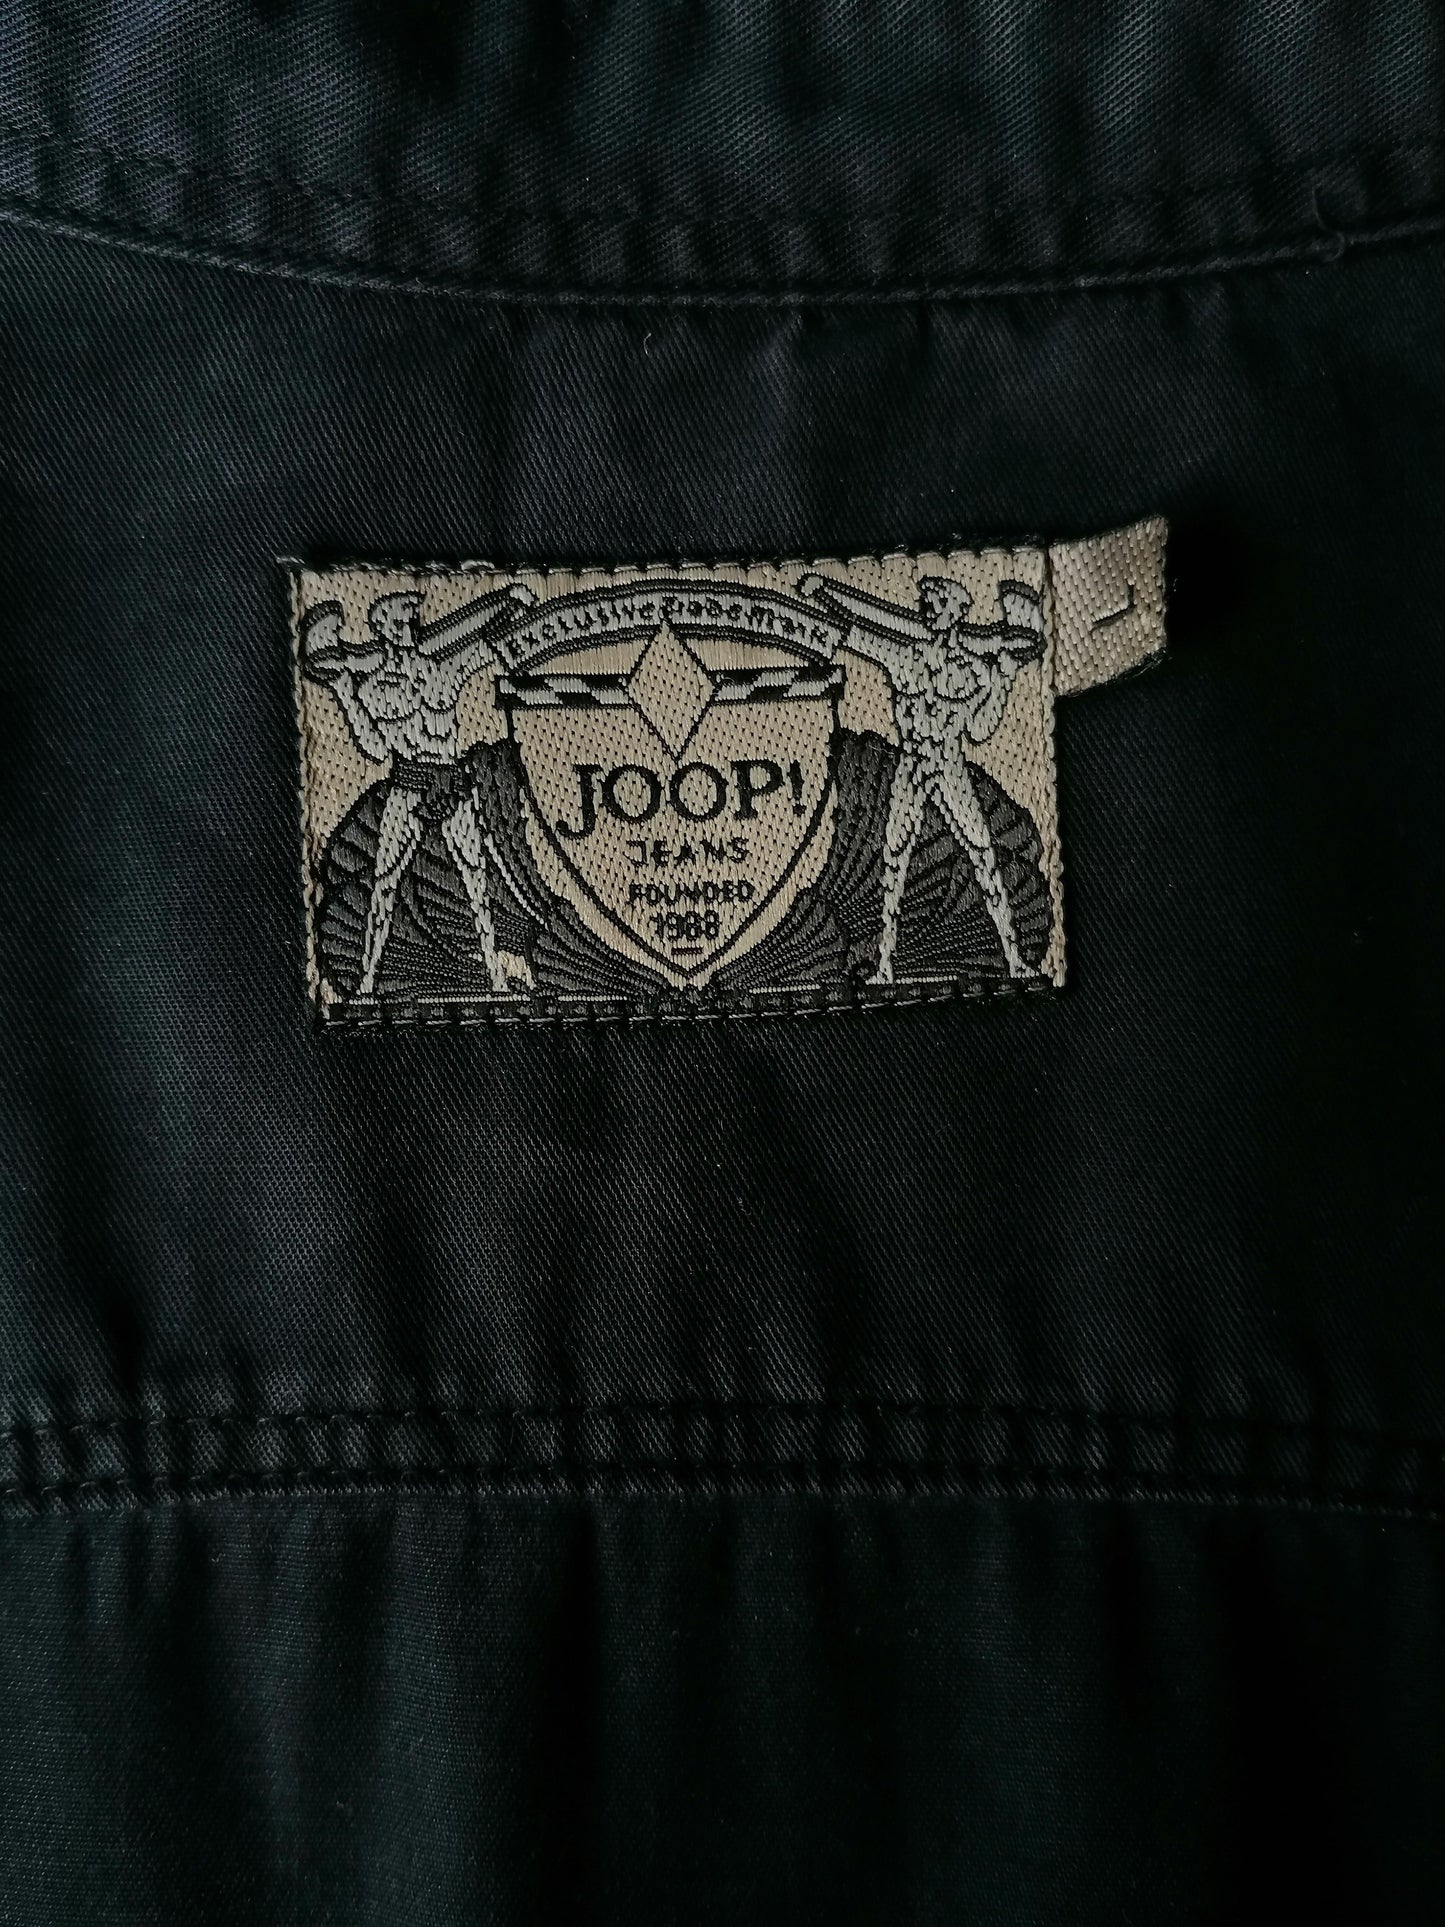 Vintage Joop Jeans overhemd. Zwart gekleurd. Maat L / XL.